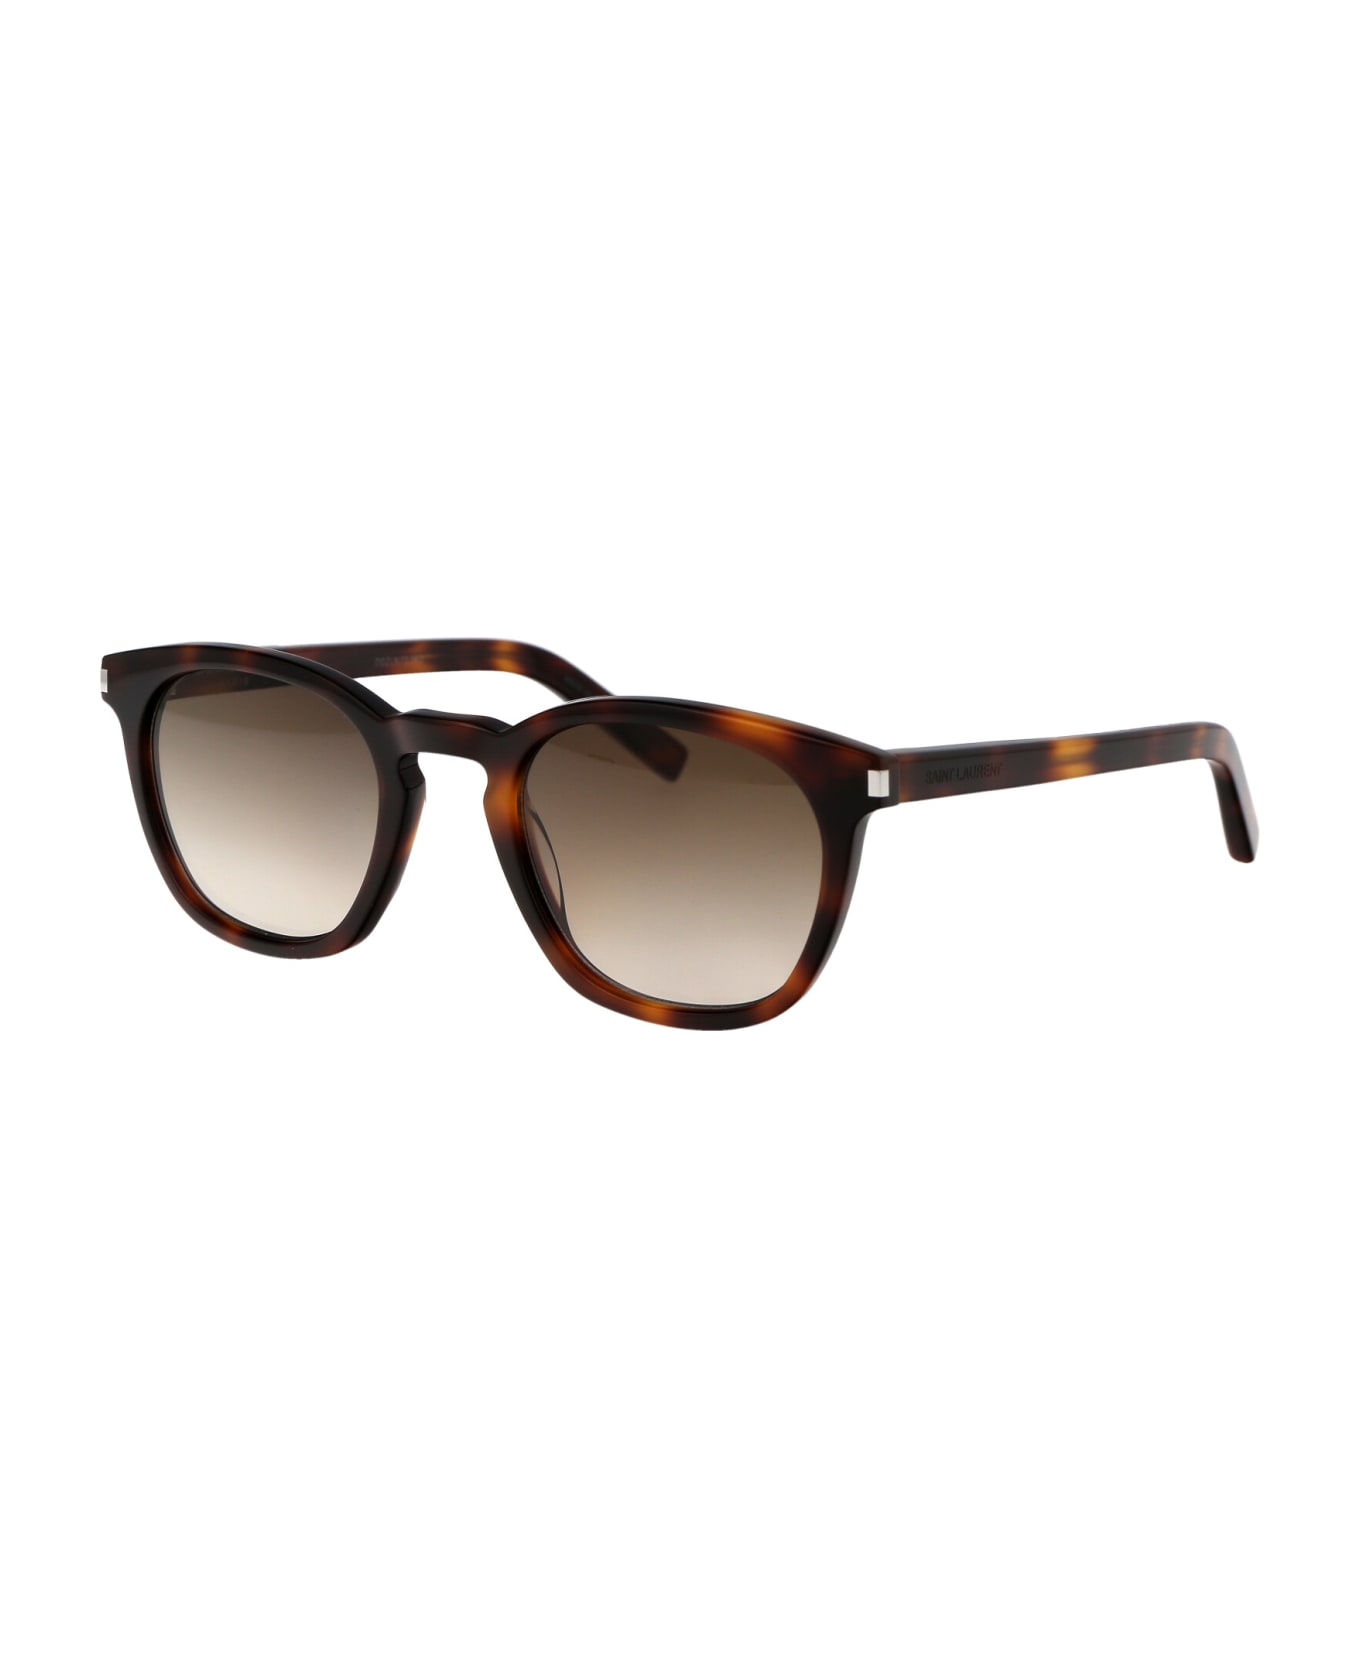 Saint Laurent Eyewear Sl 28 Sunglasses - 048 HAVANA HAVANA BROWN サングラス